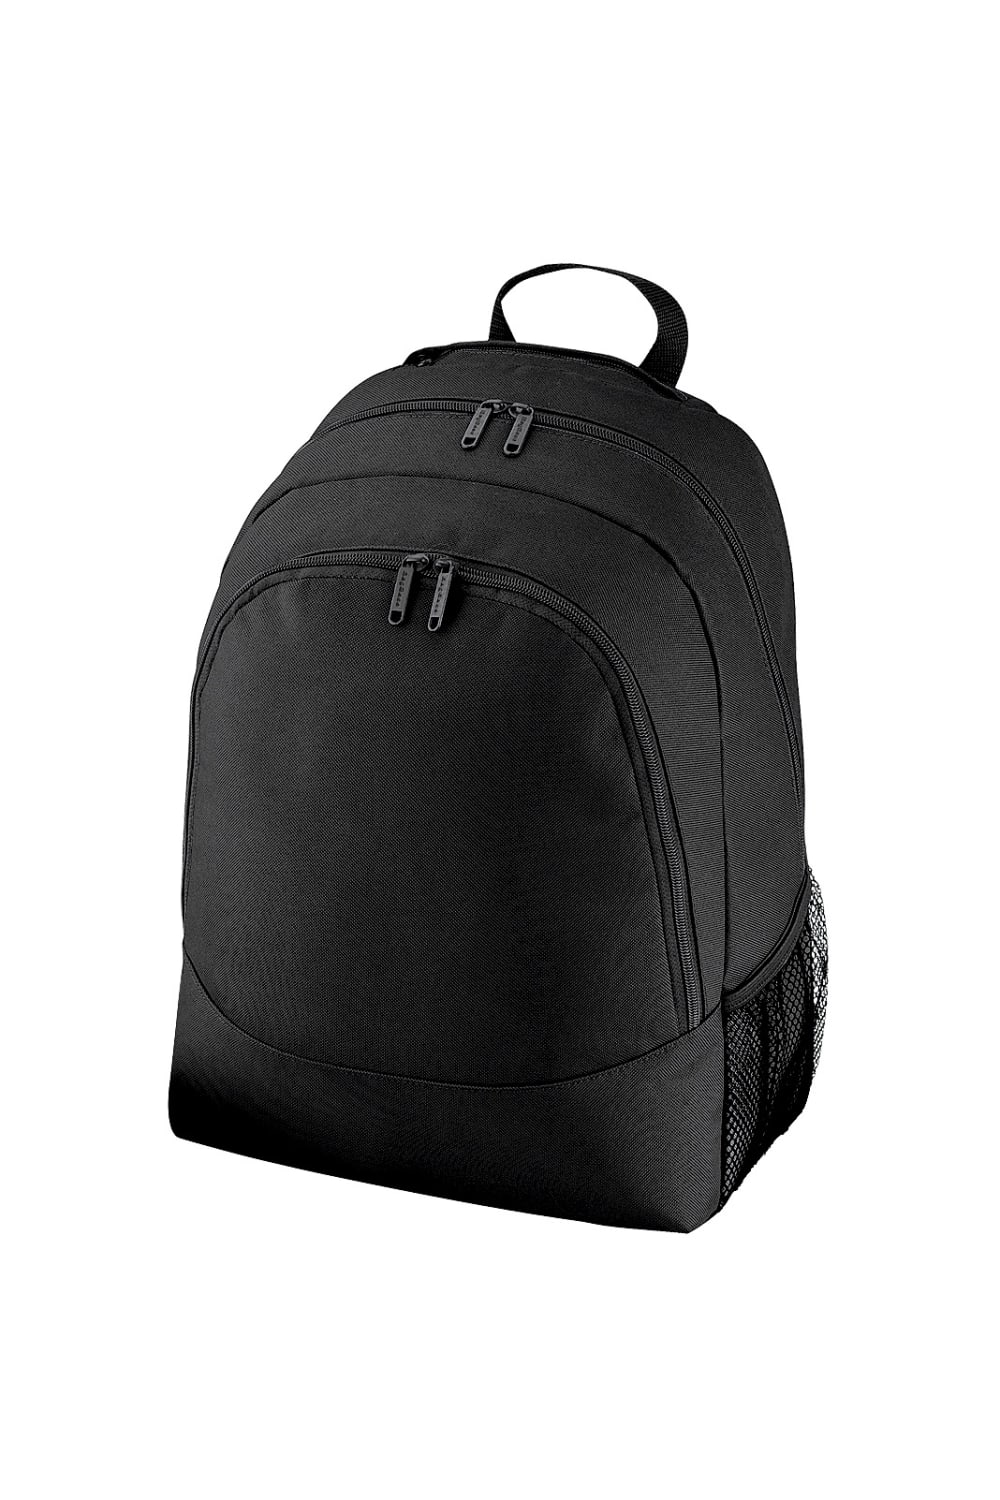 Bagbase Universal Multipurpose Backpack / Rucksack / Bag (18 Litres) (Pack of 2) (Black) (One Size)